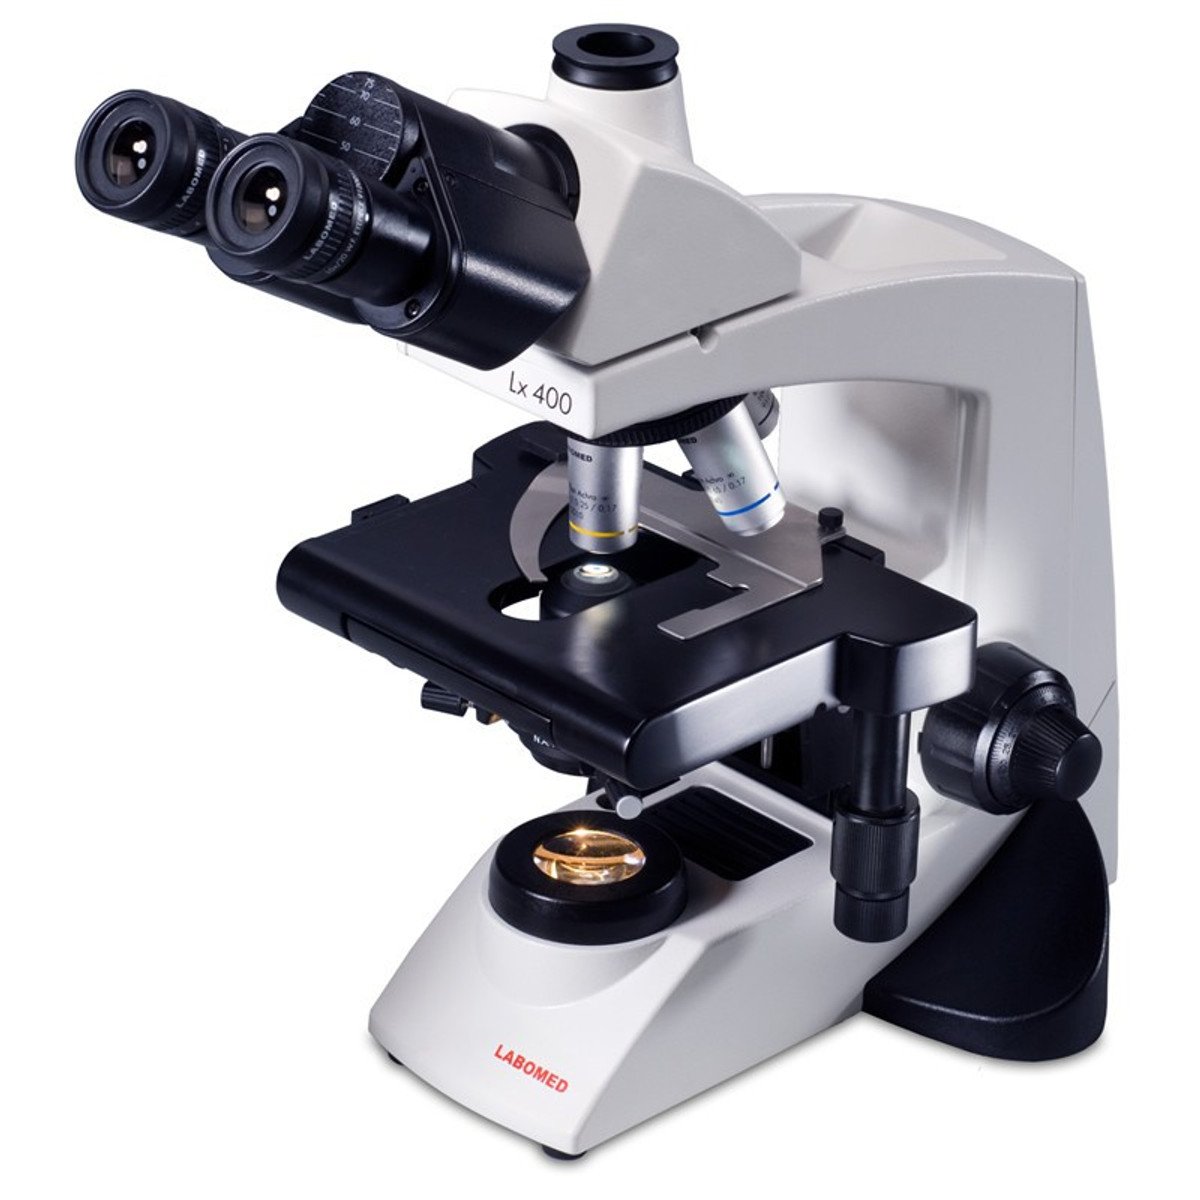 Labomed 9126012 Lx400 Trinocular Cordless LED Microscope